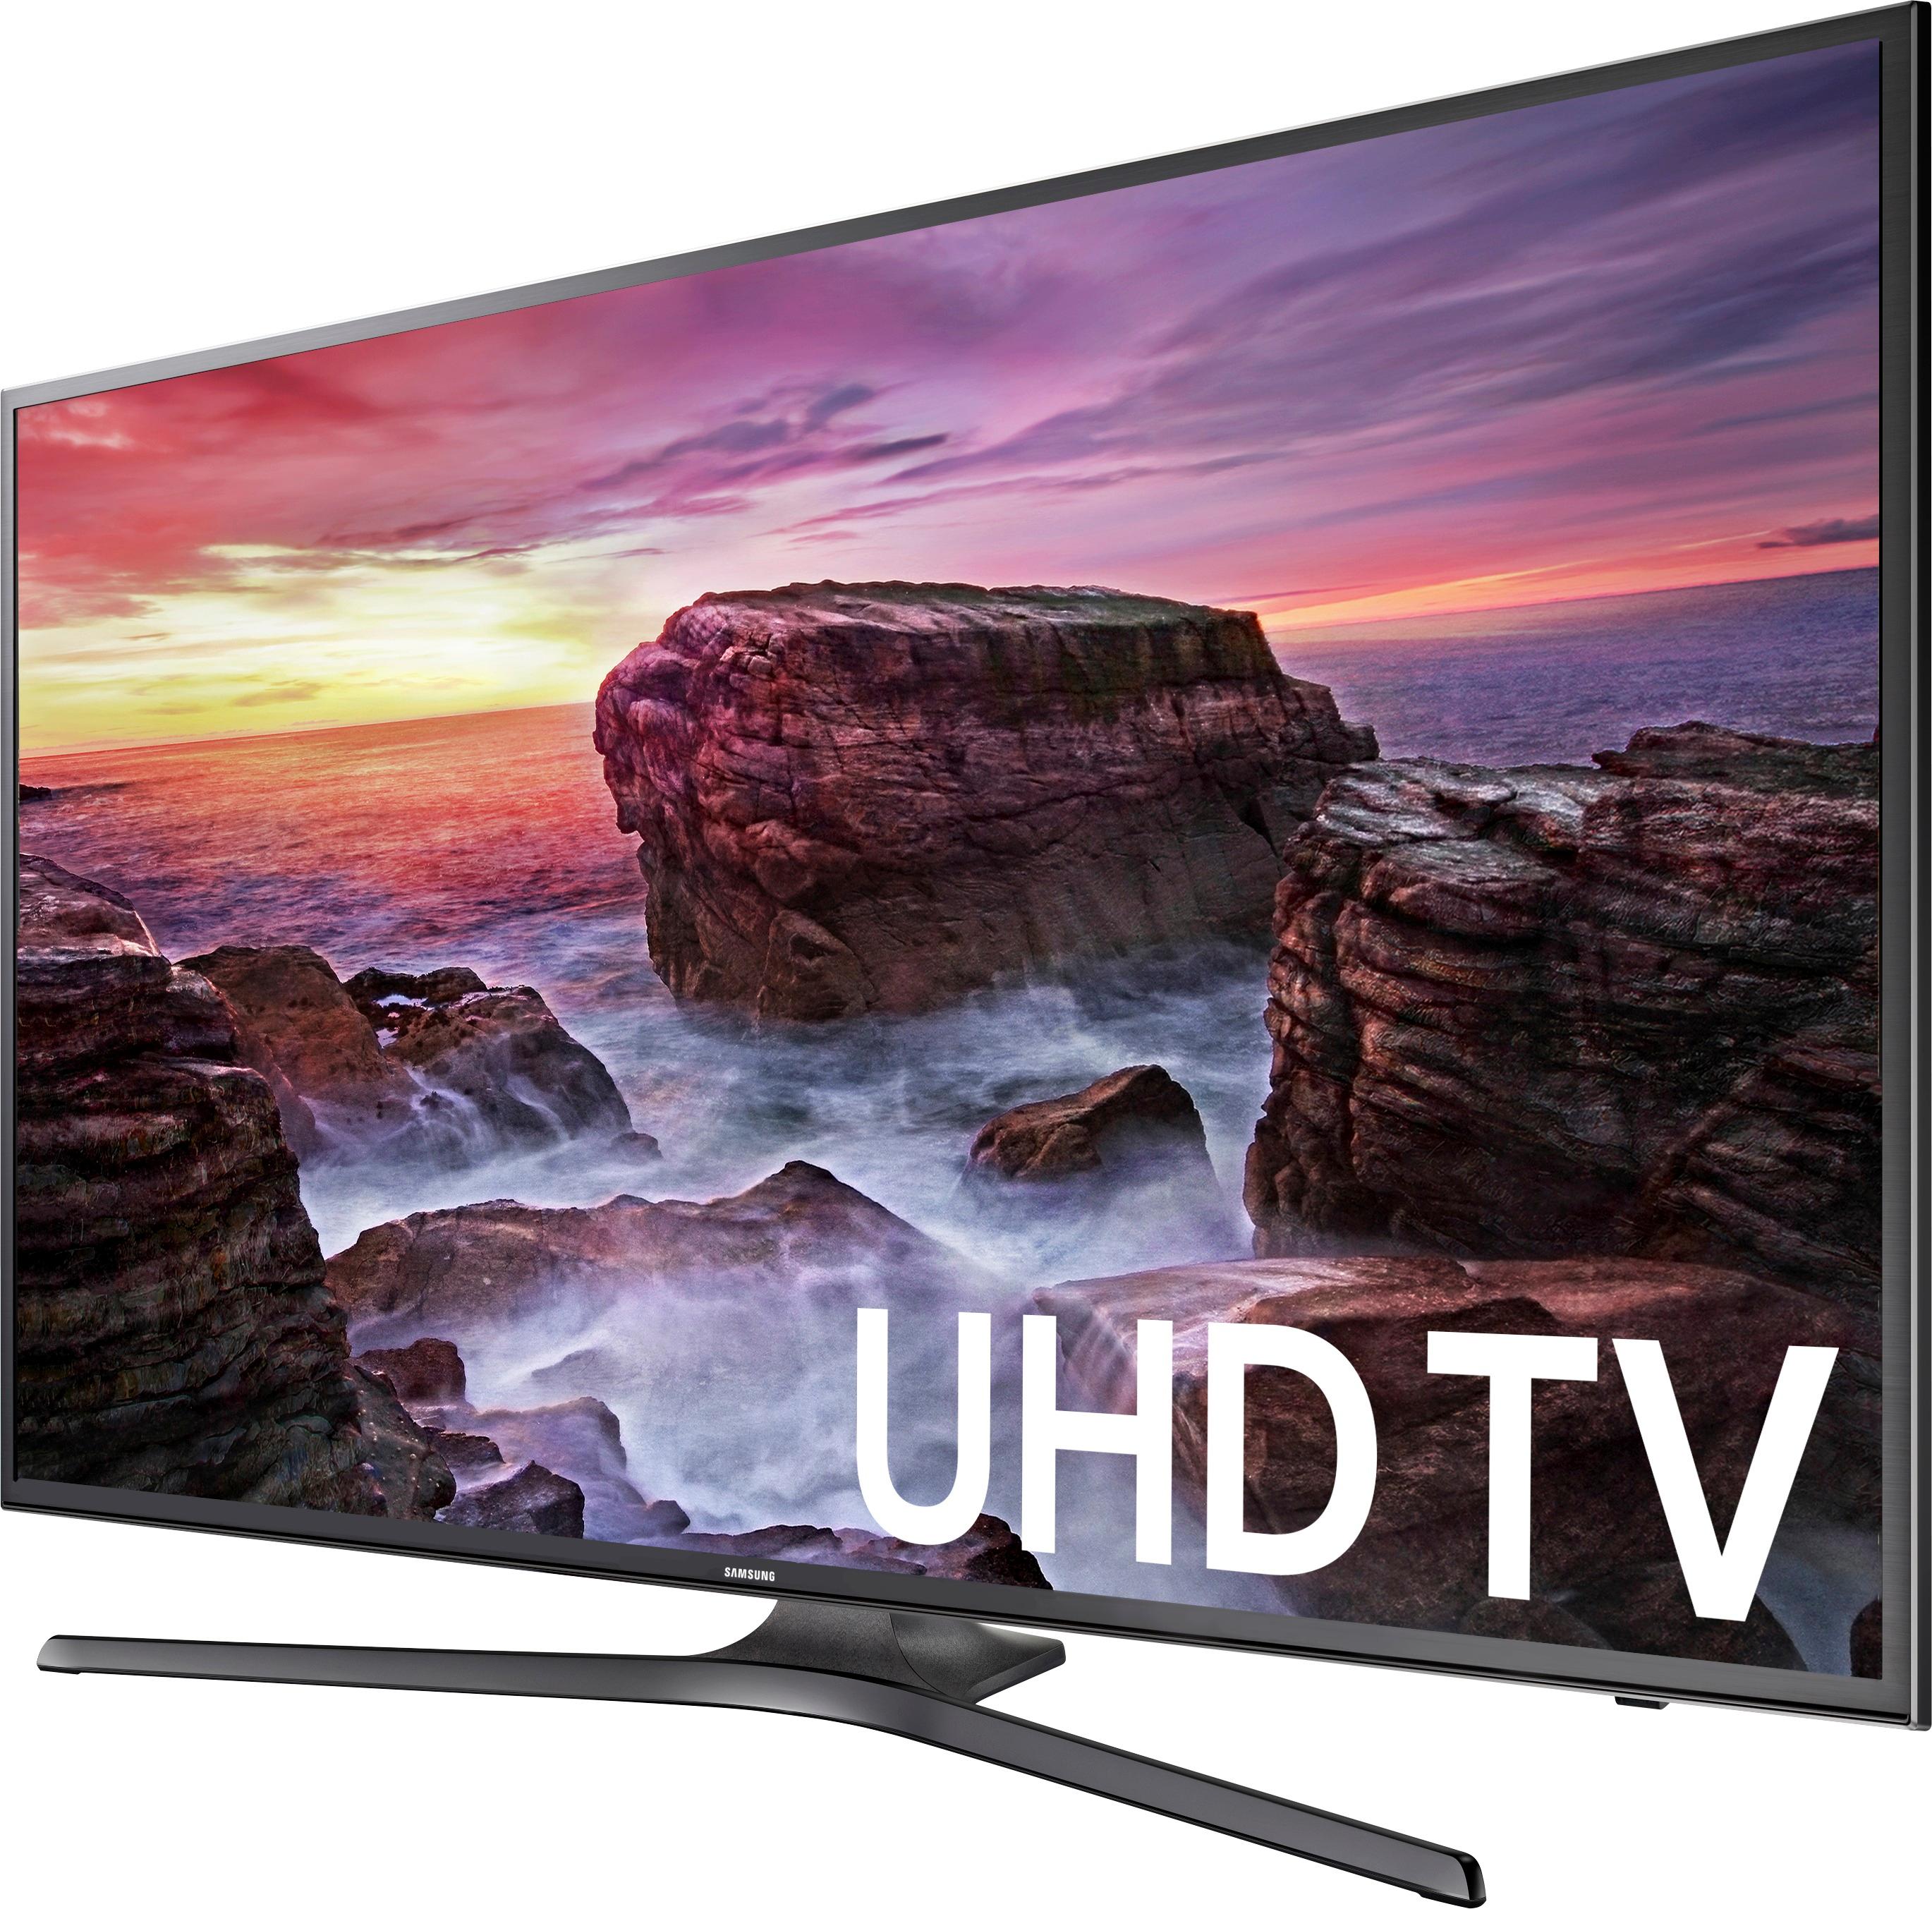 Samsung 43 4K Ultra HD Smart LED TV Model UN43AU7000FXZX